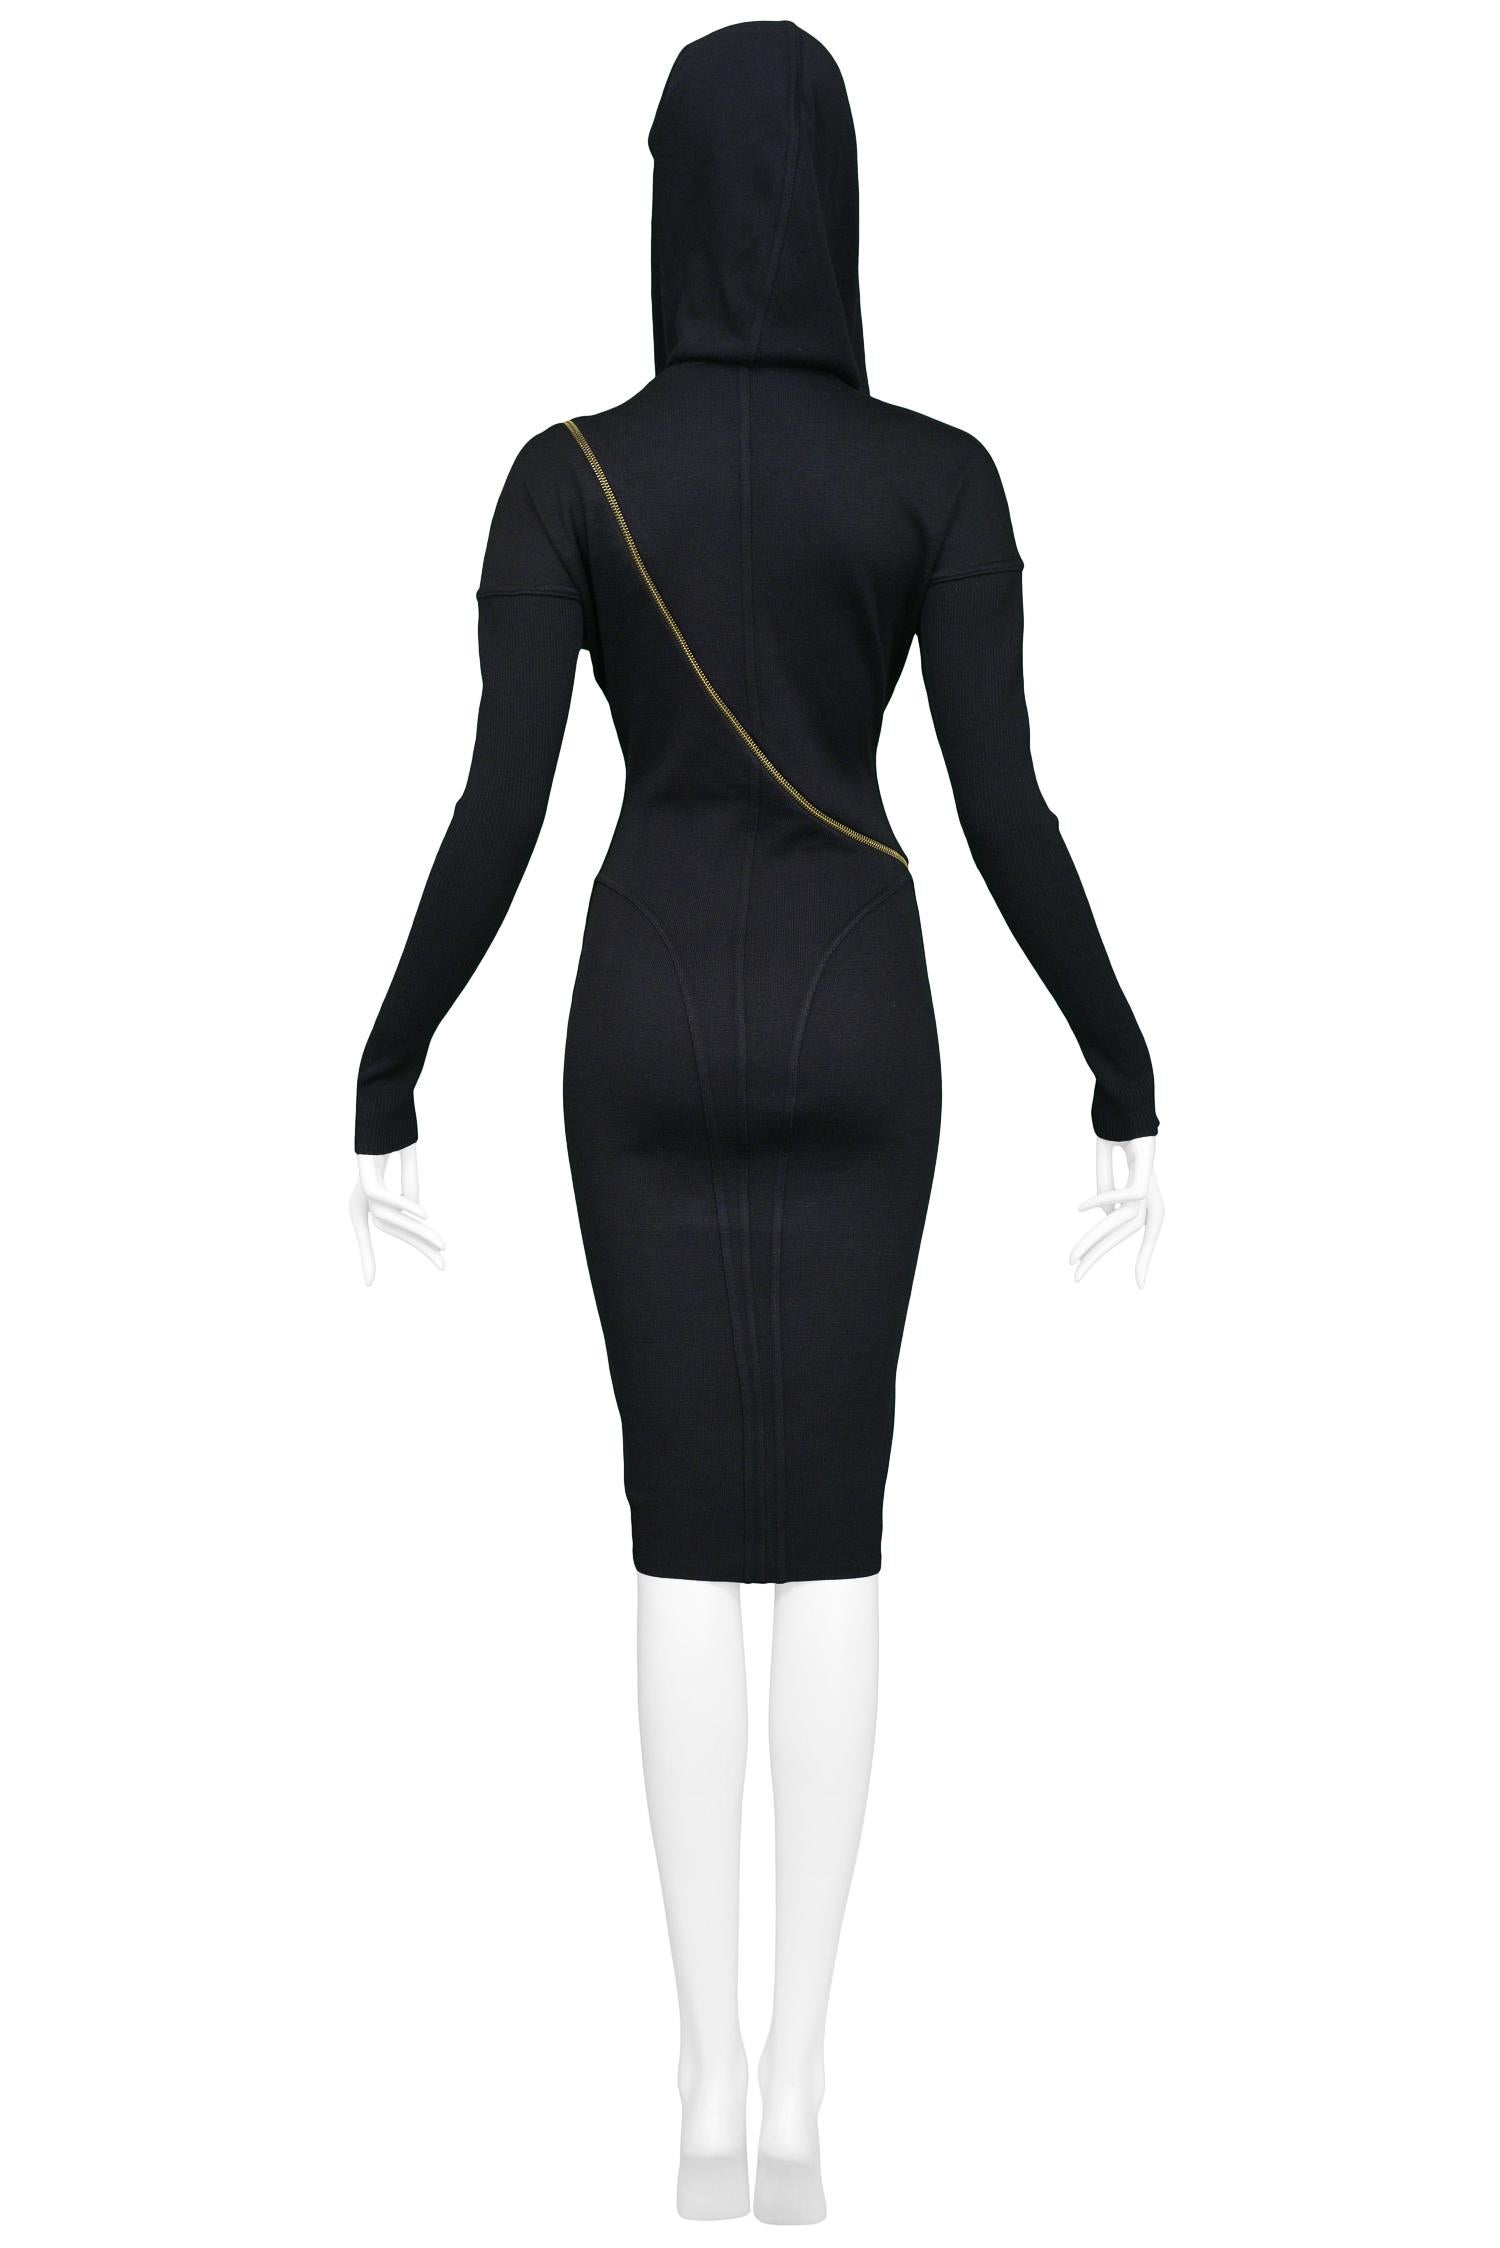 Iconic 1986 Black Hooded Zipper Dress 2